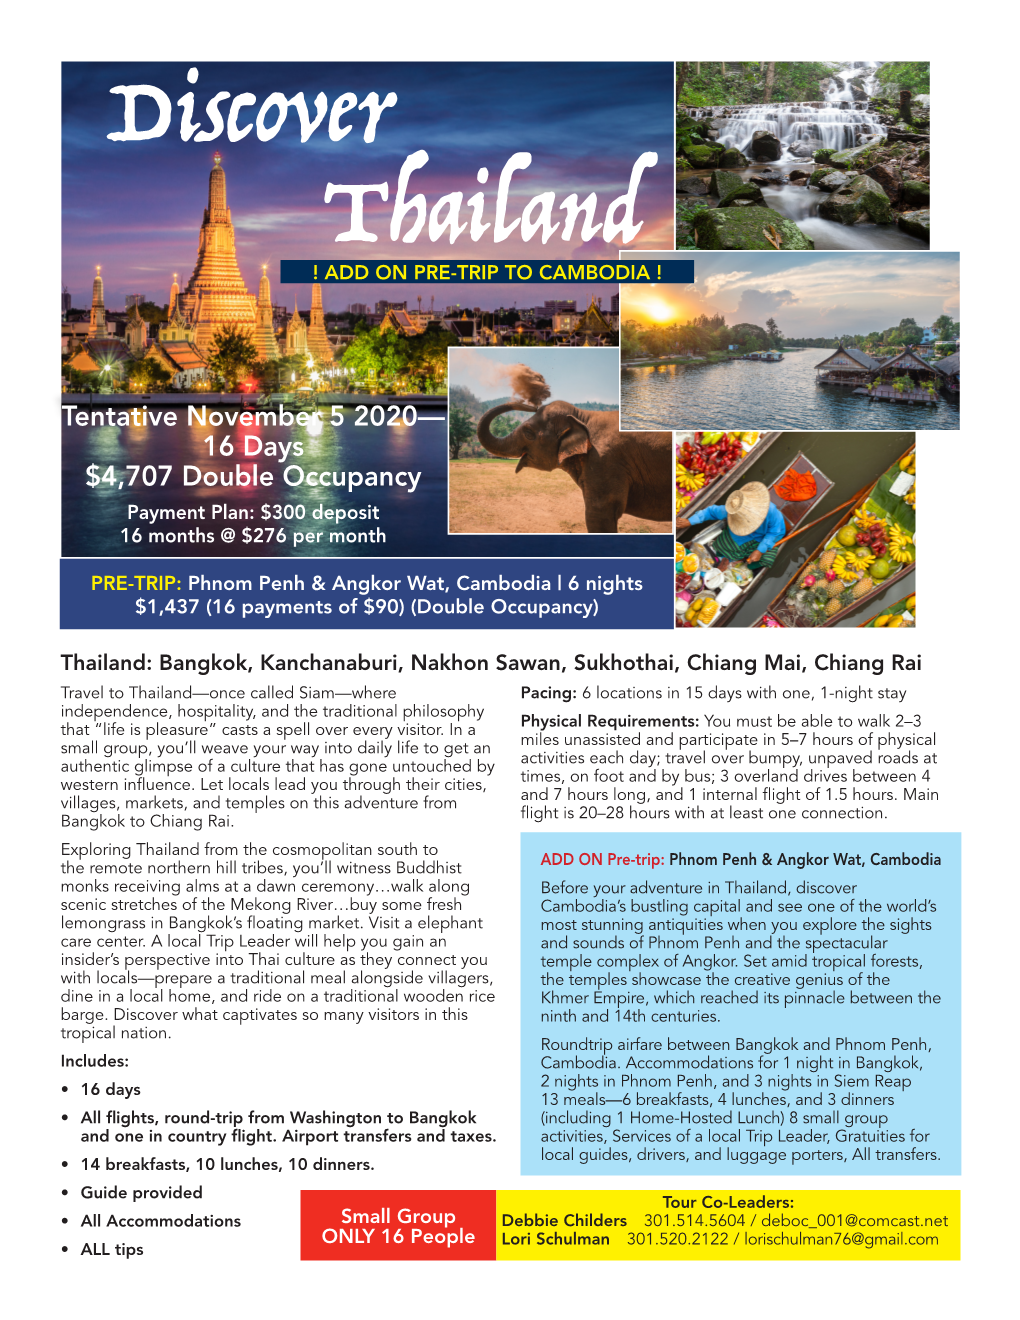 Discover Thailand